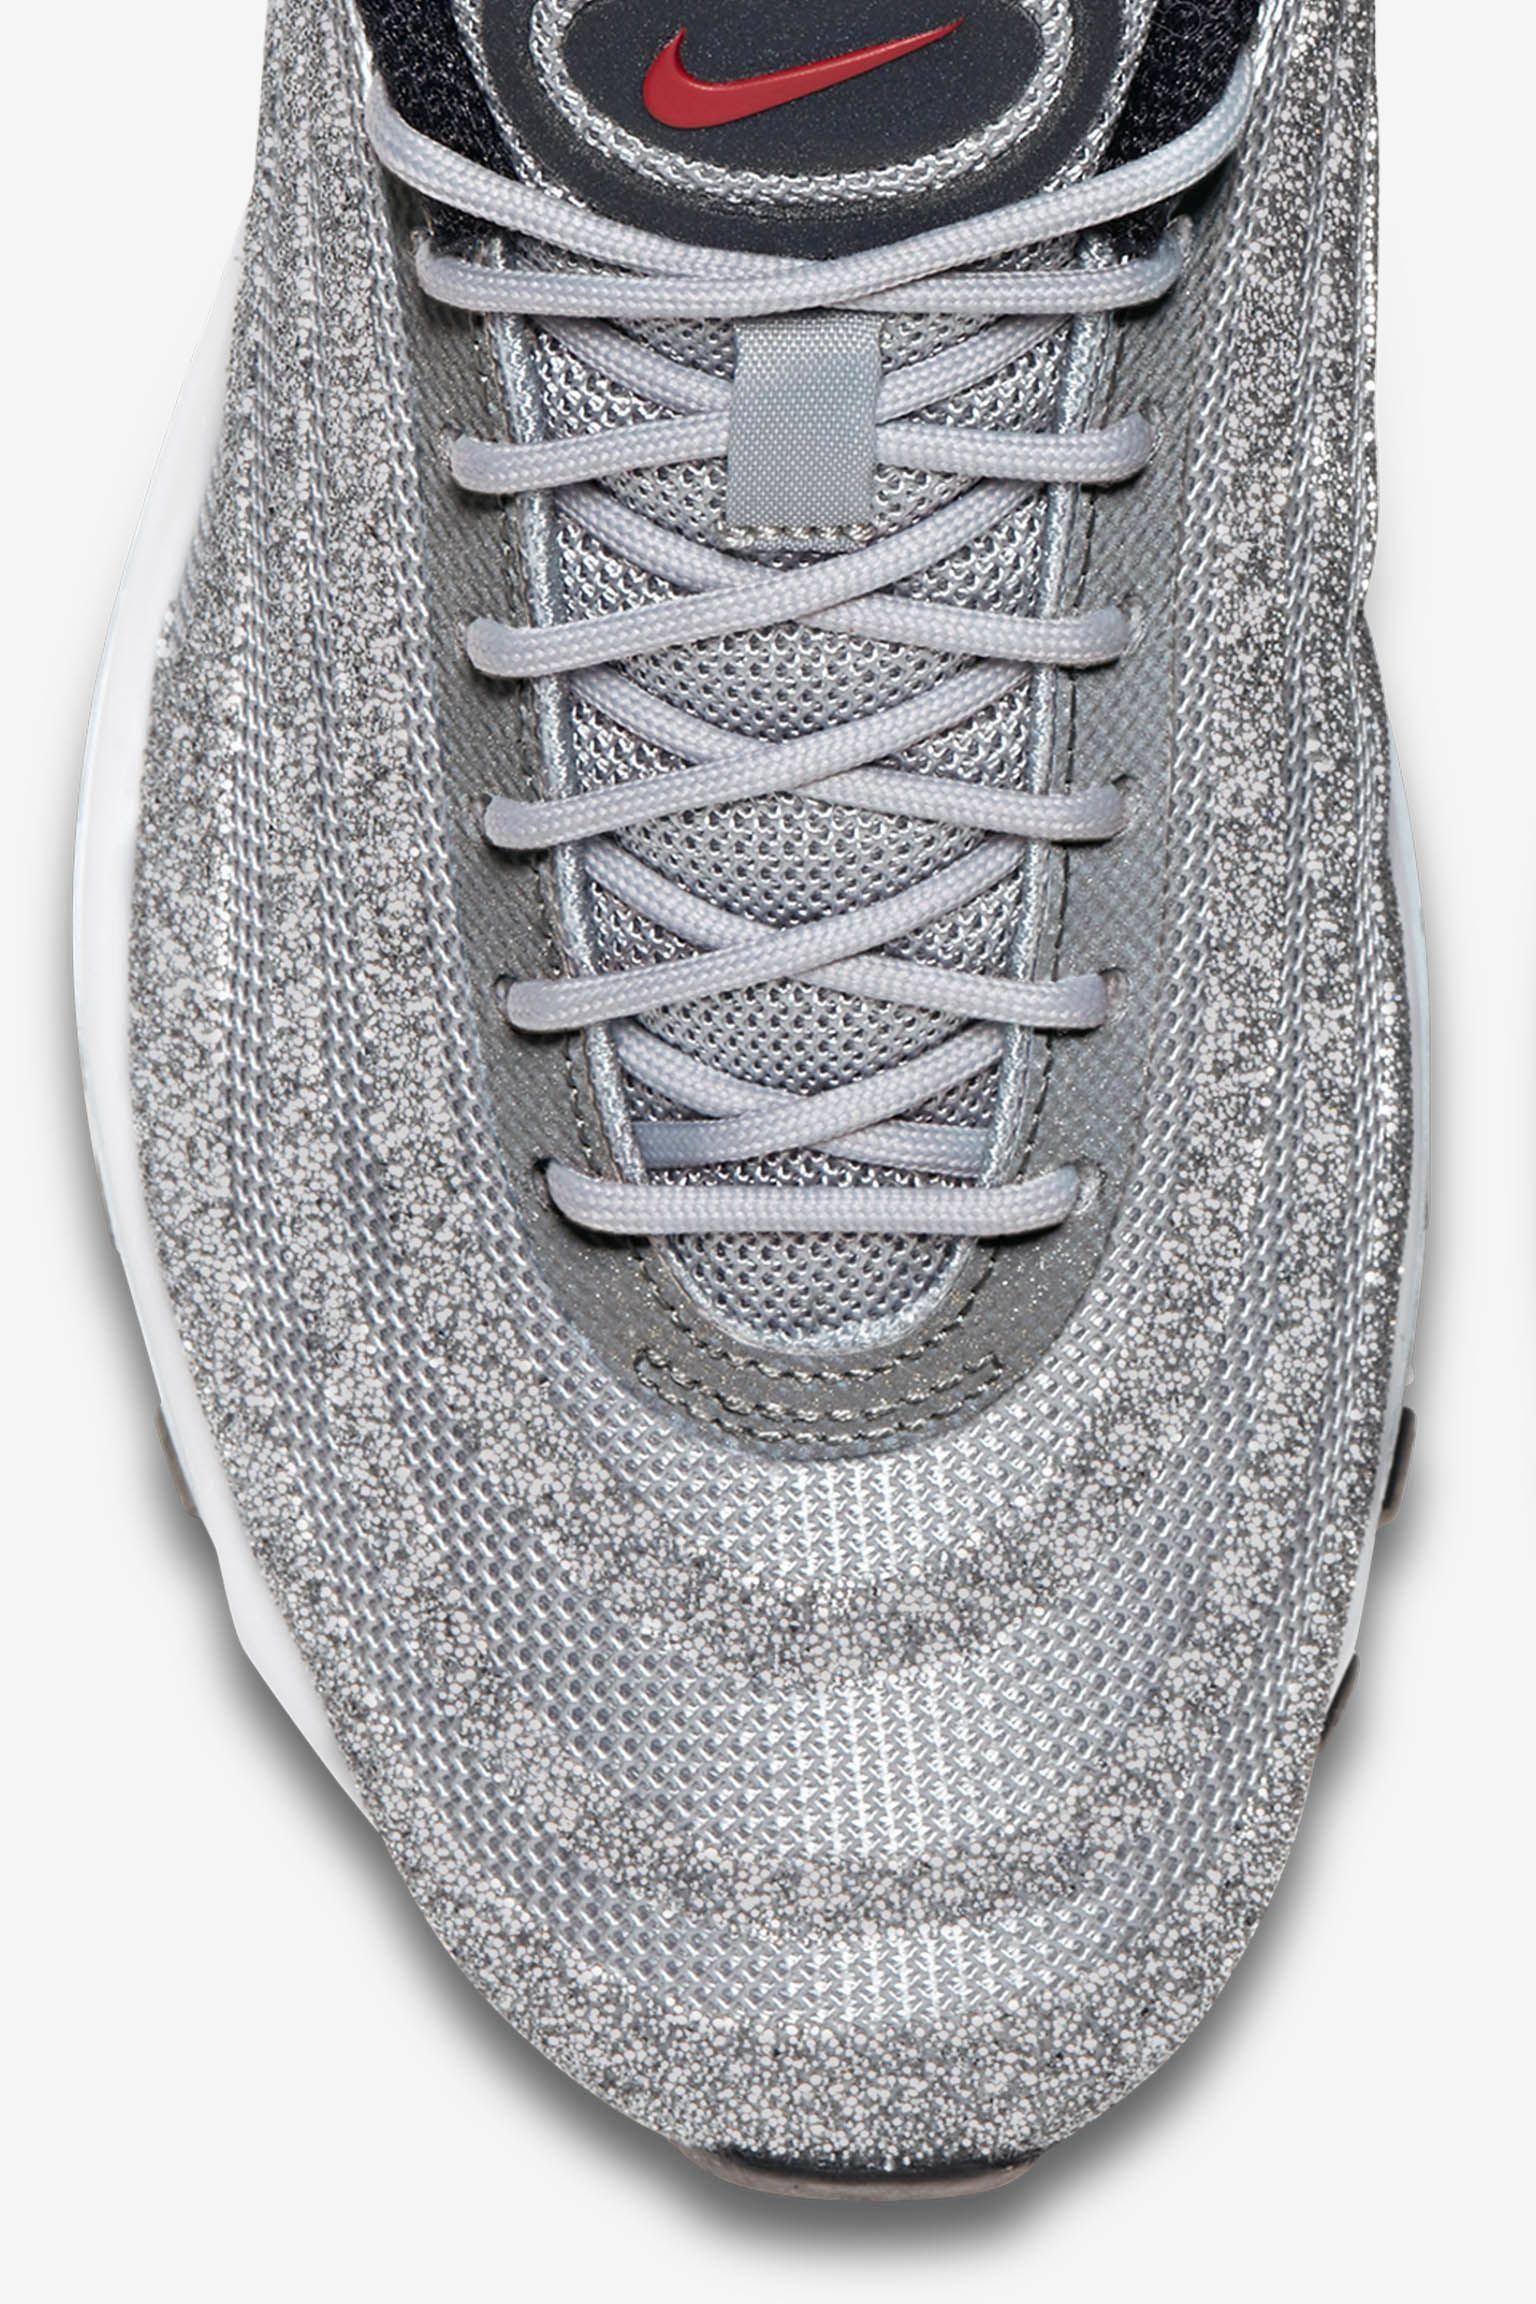 grey sparkly air max 97